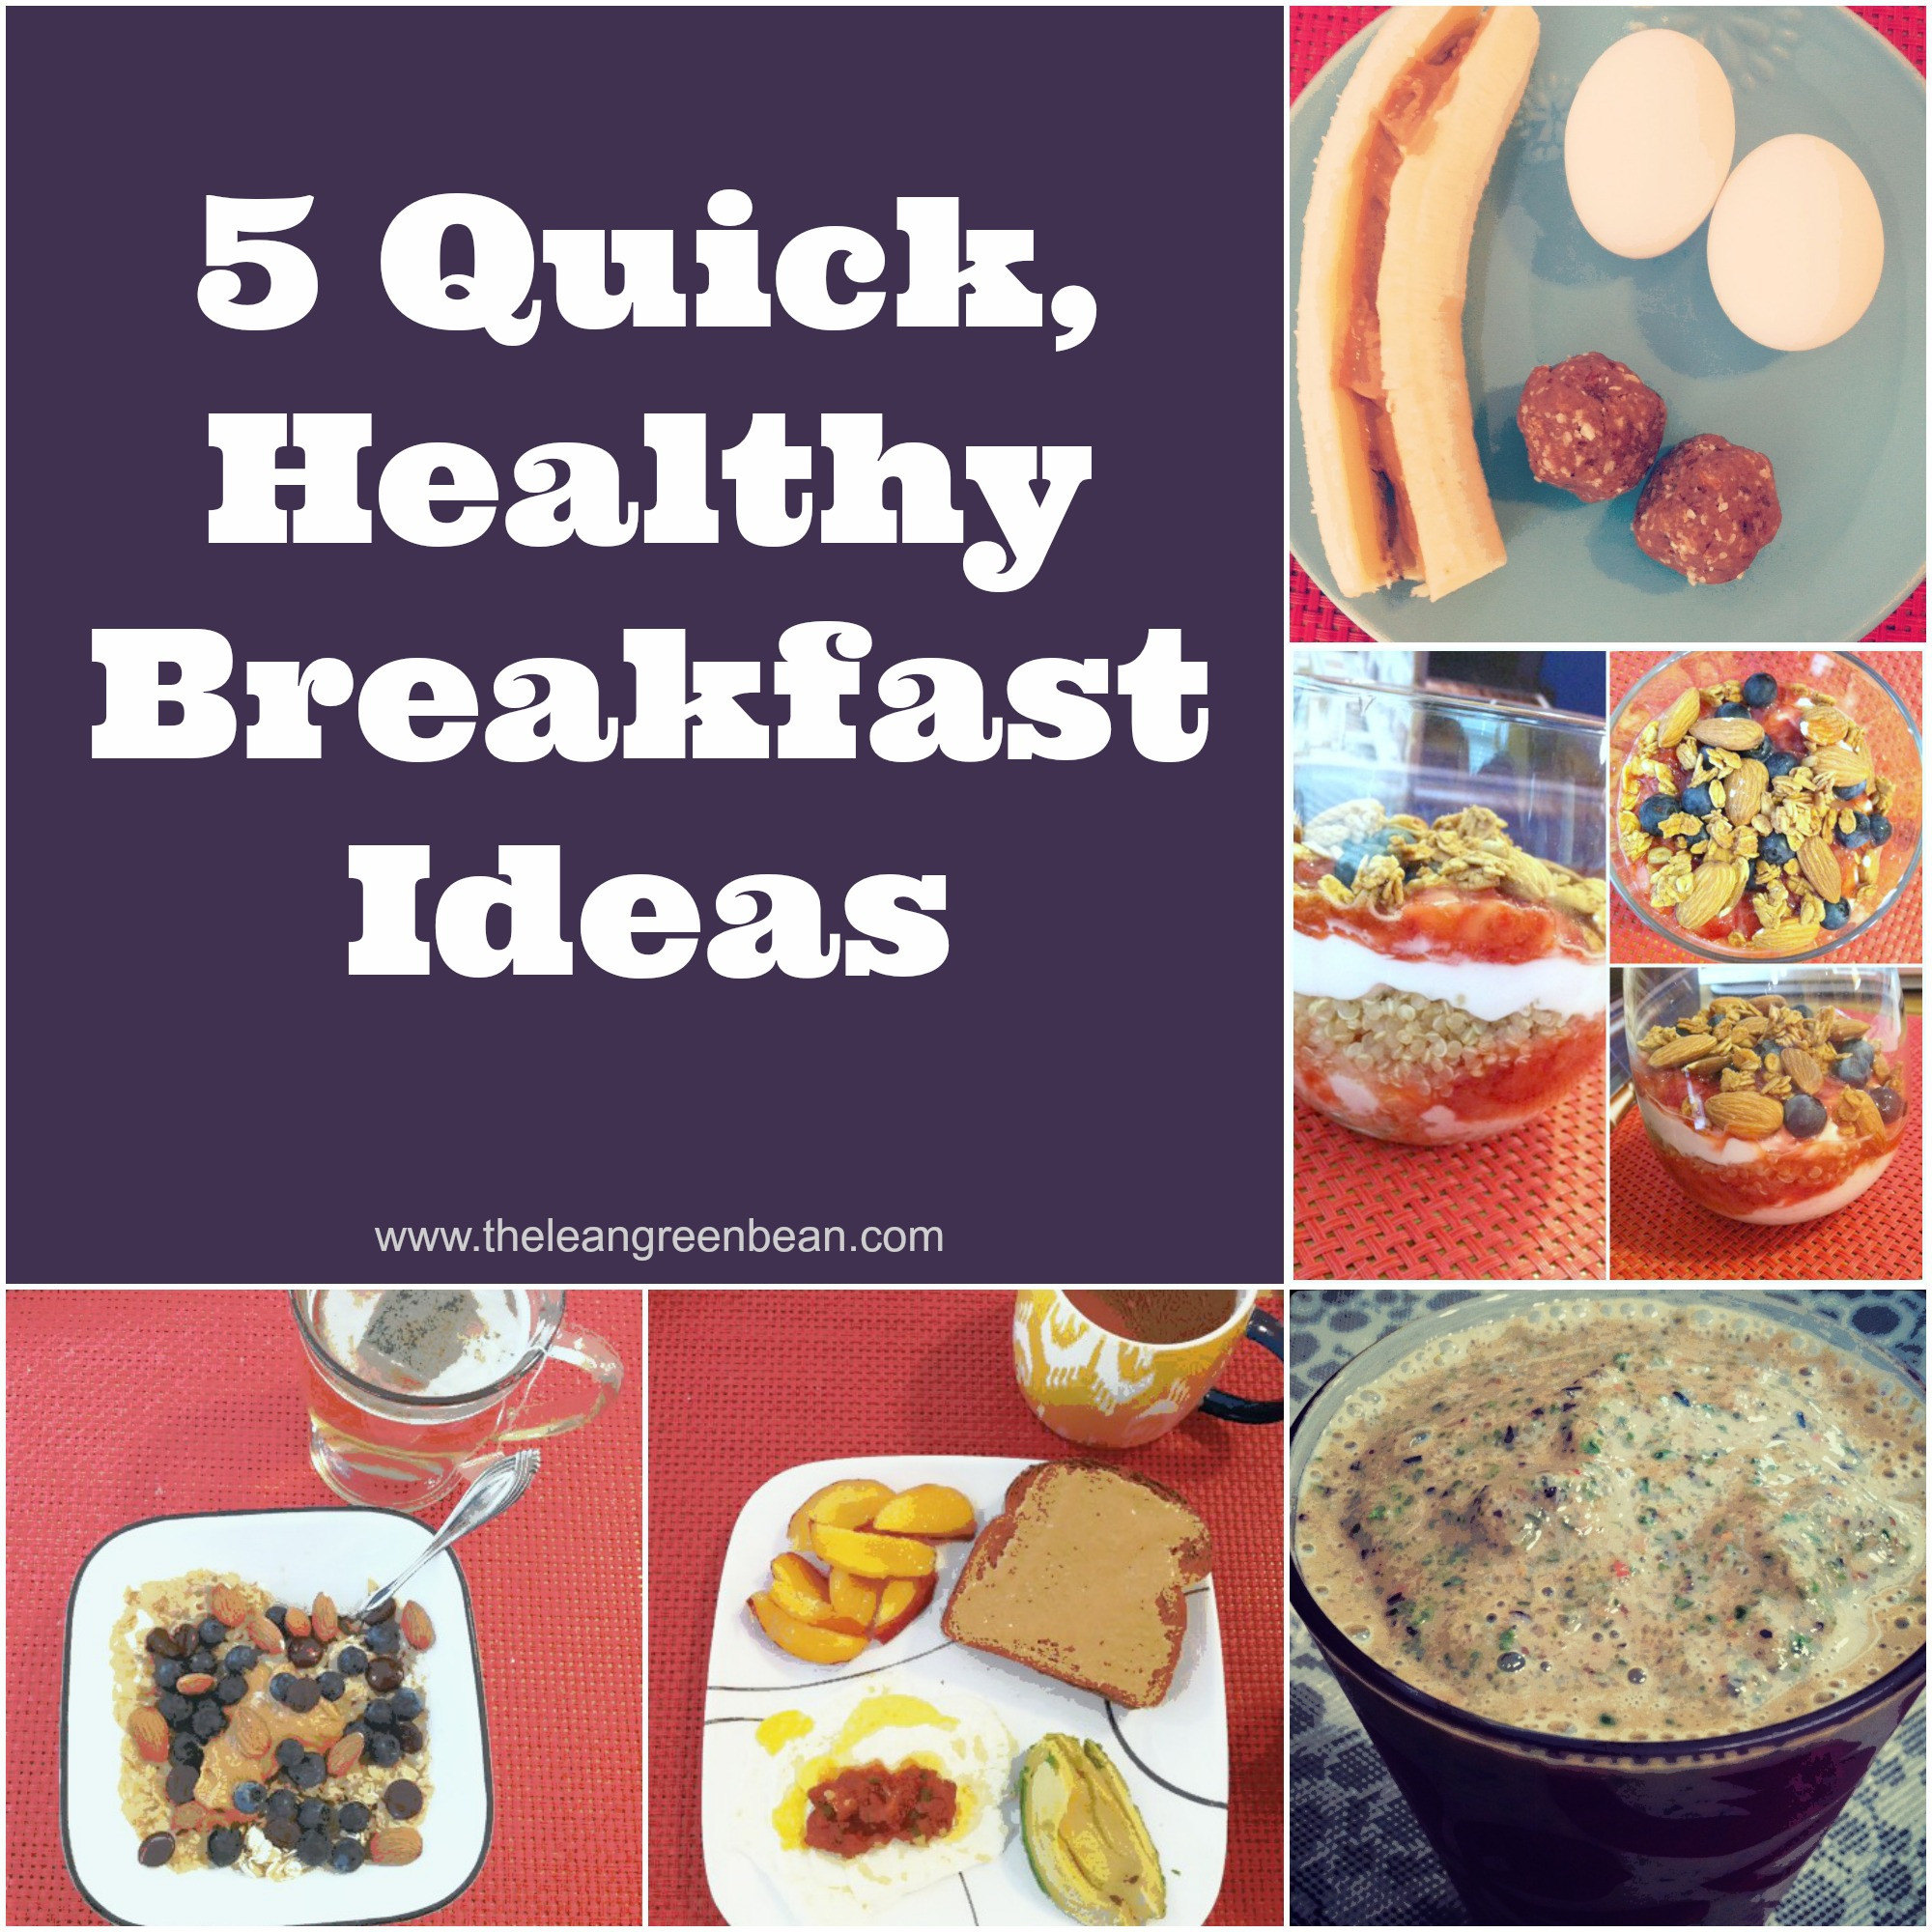 Healthy Fast Breakfast Recipes
 5 Quick Healthy Breakfast Ideas from a Registered Dietitian